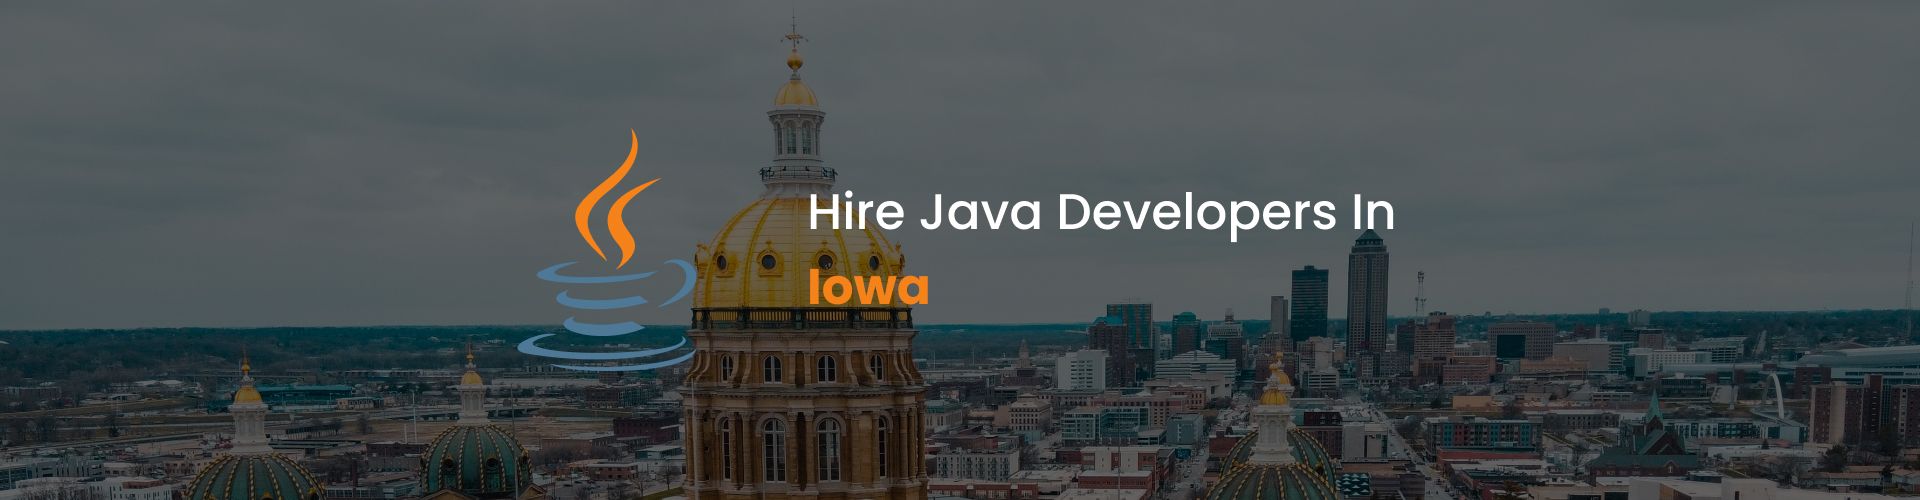 hire java developers in iowa